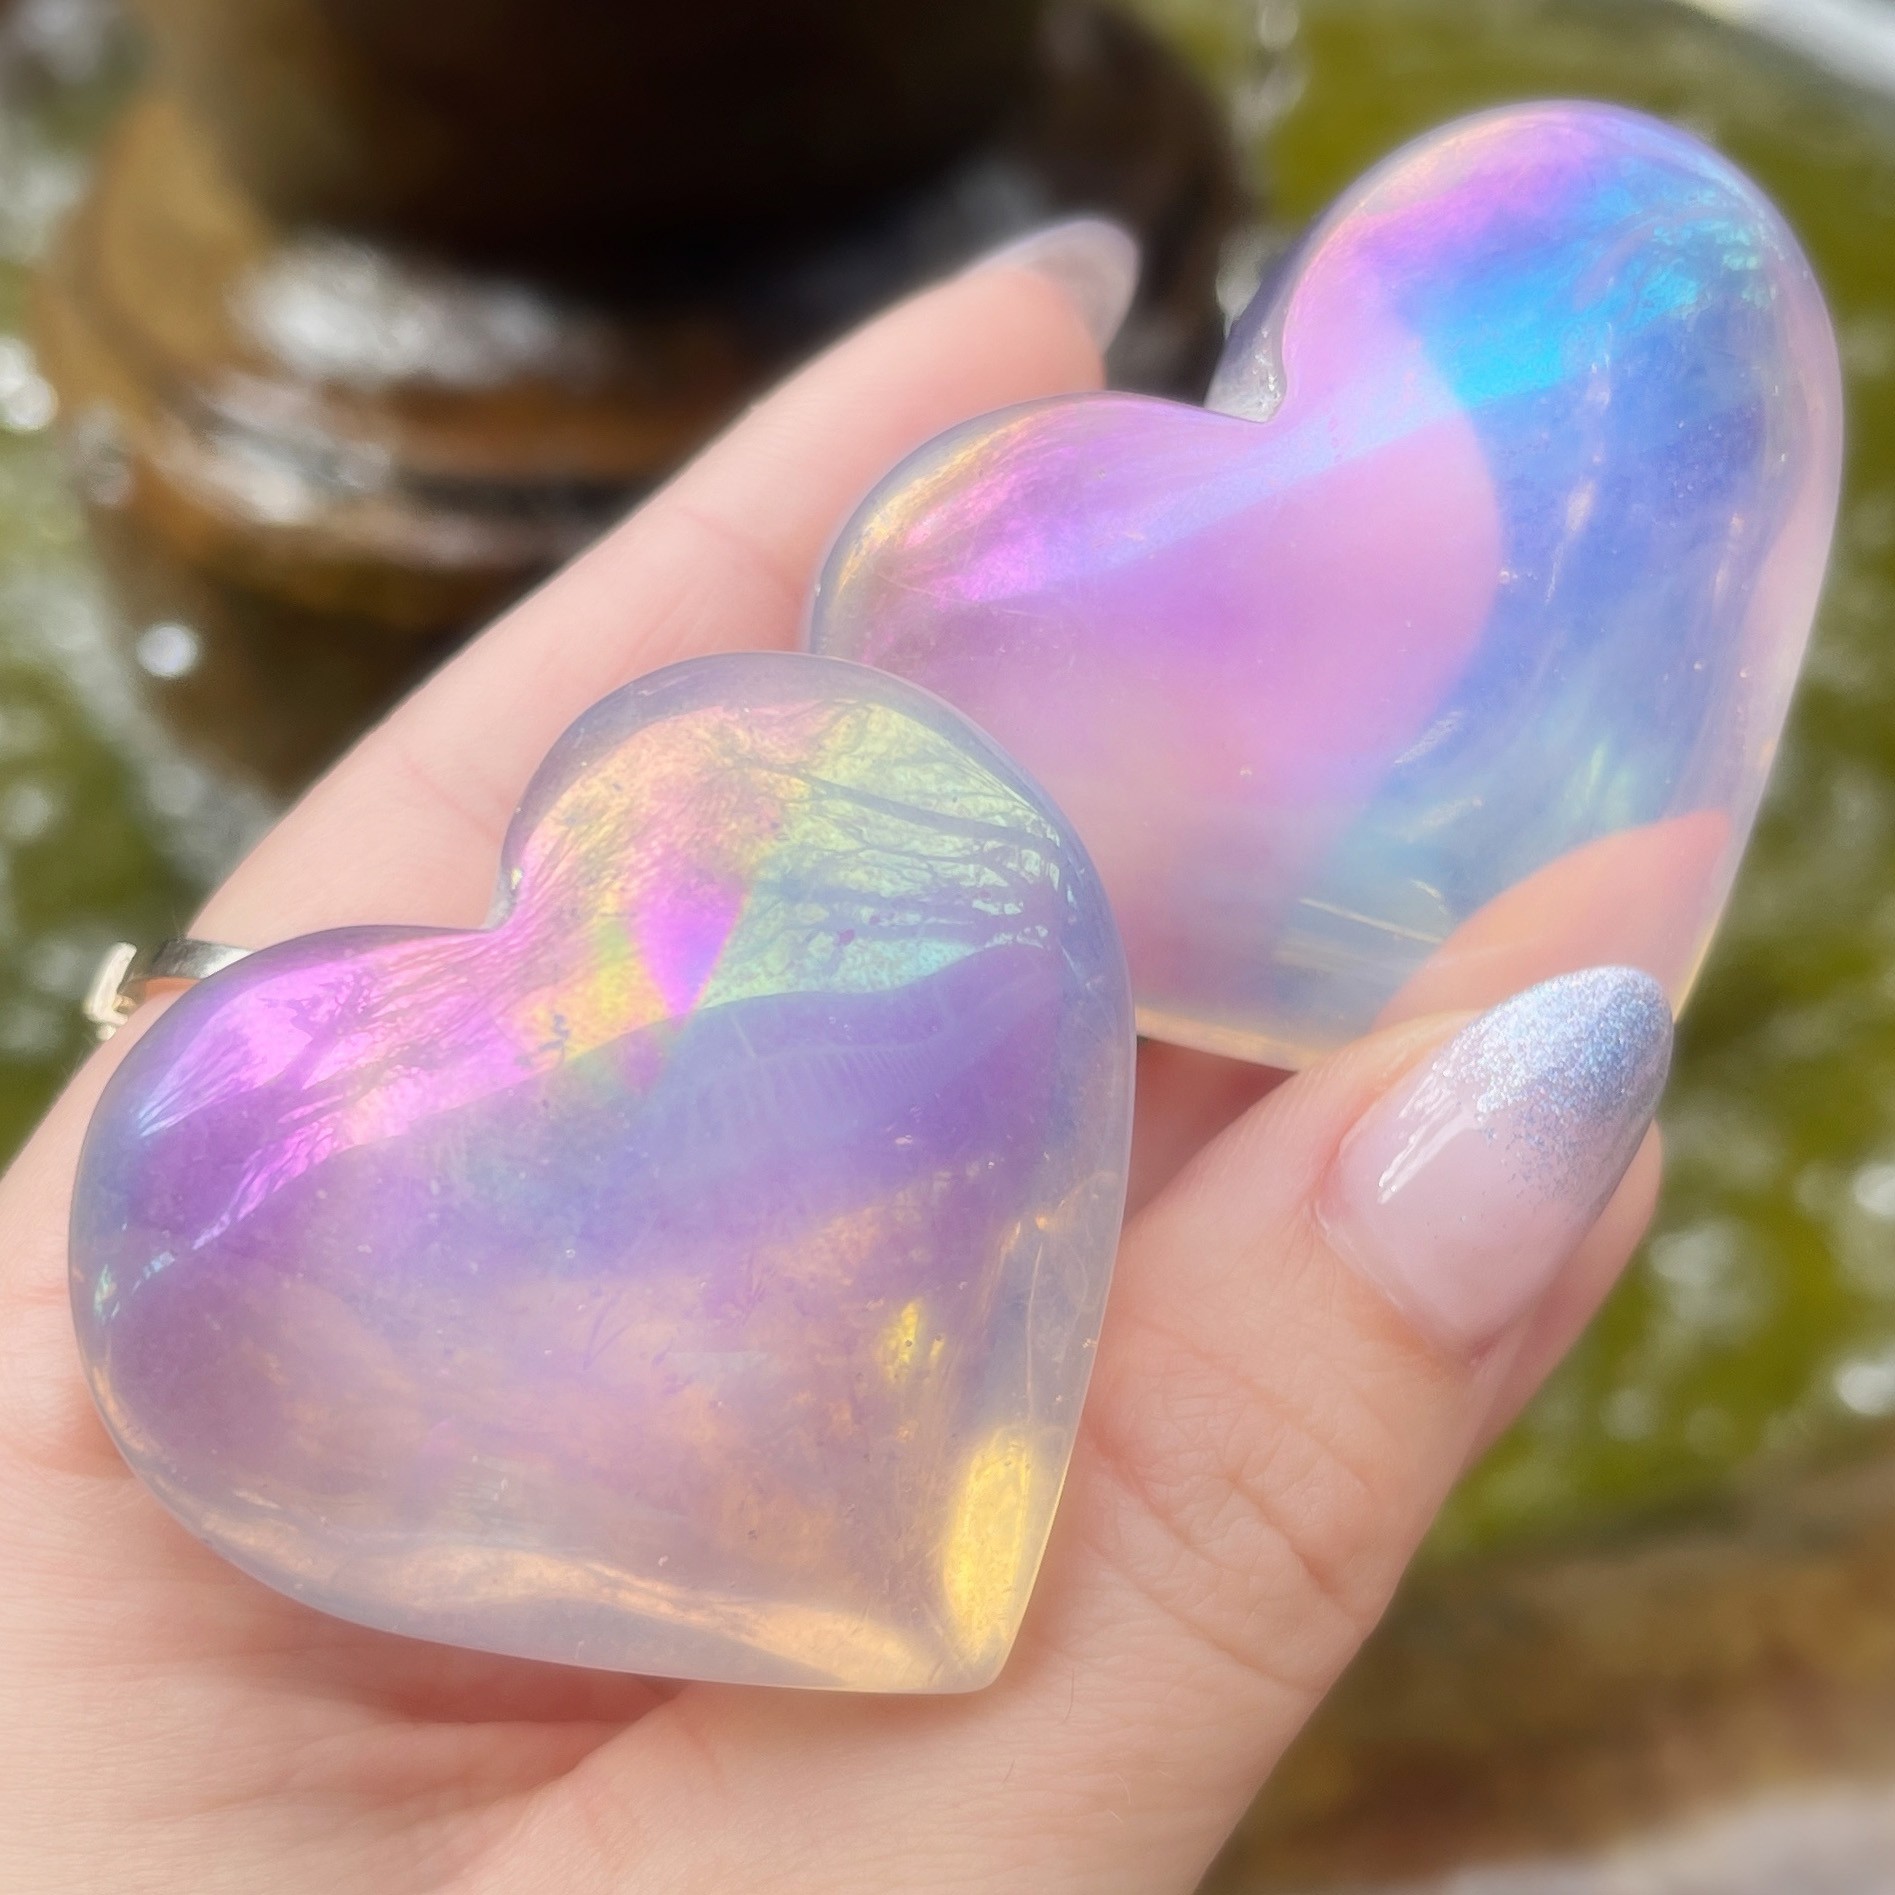 Angel Aura Quartz Heart Shaped Crystal - 1 to 2